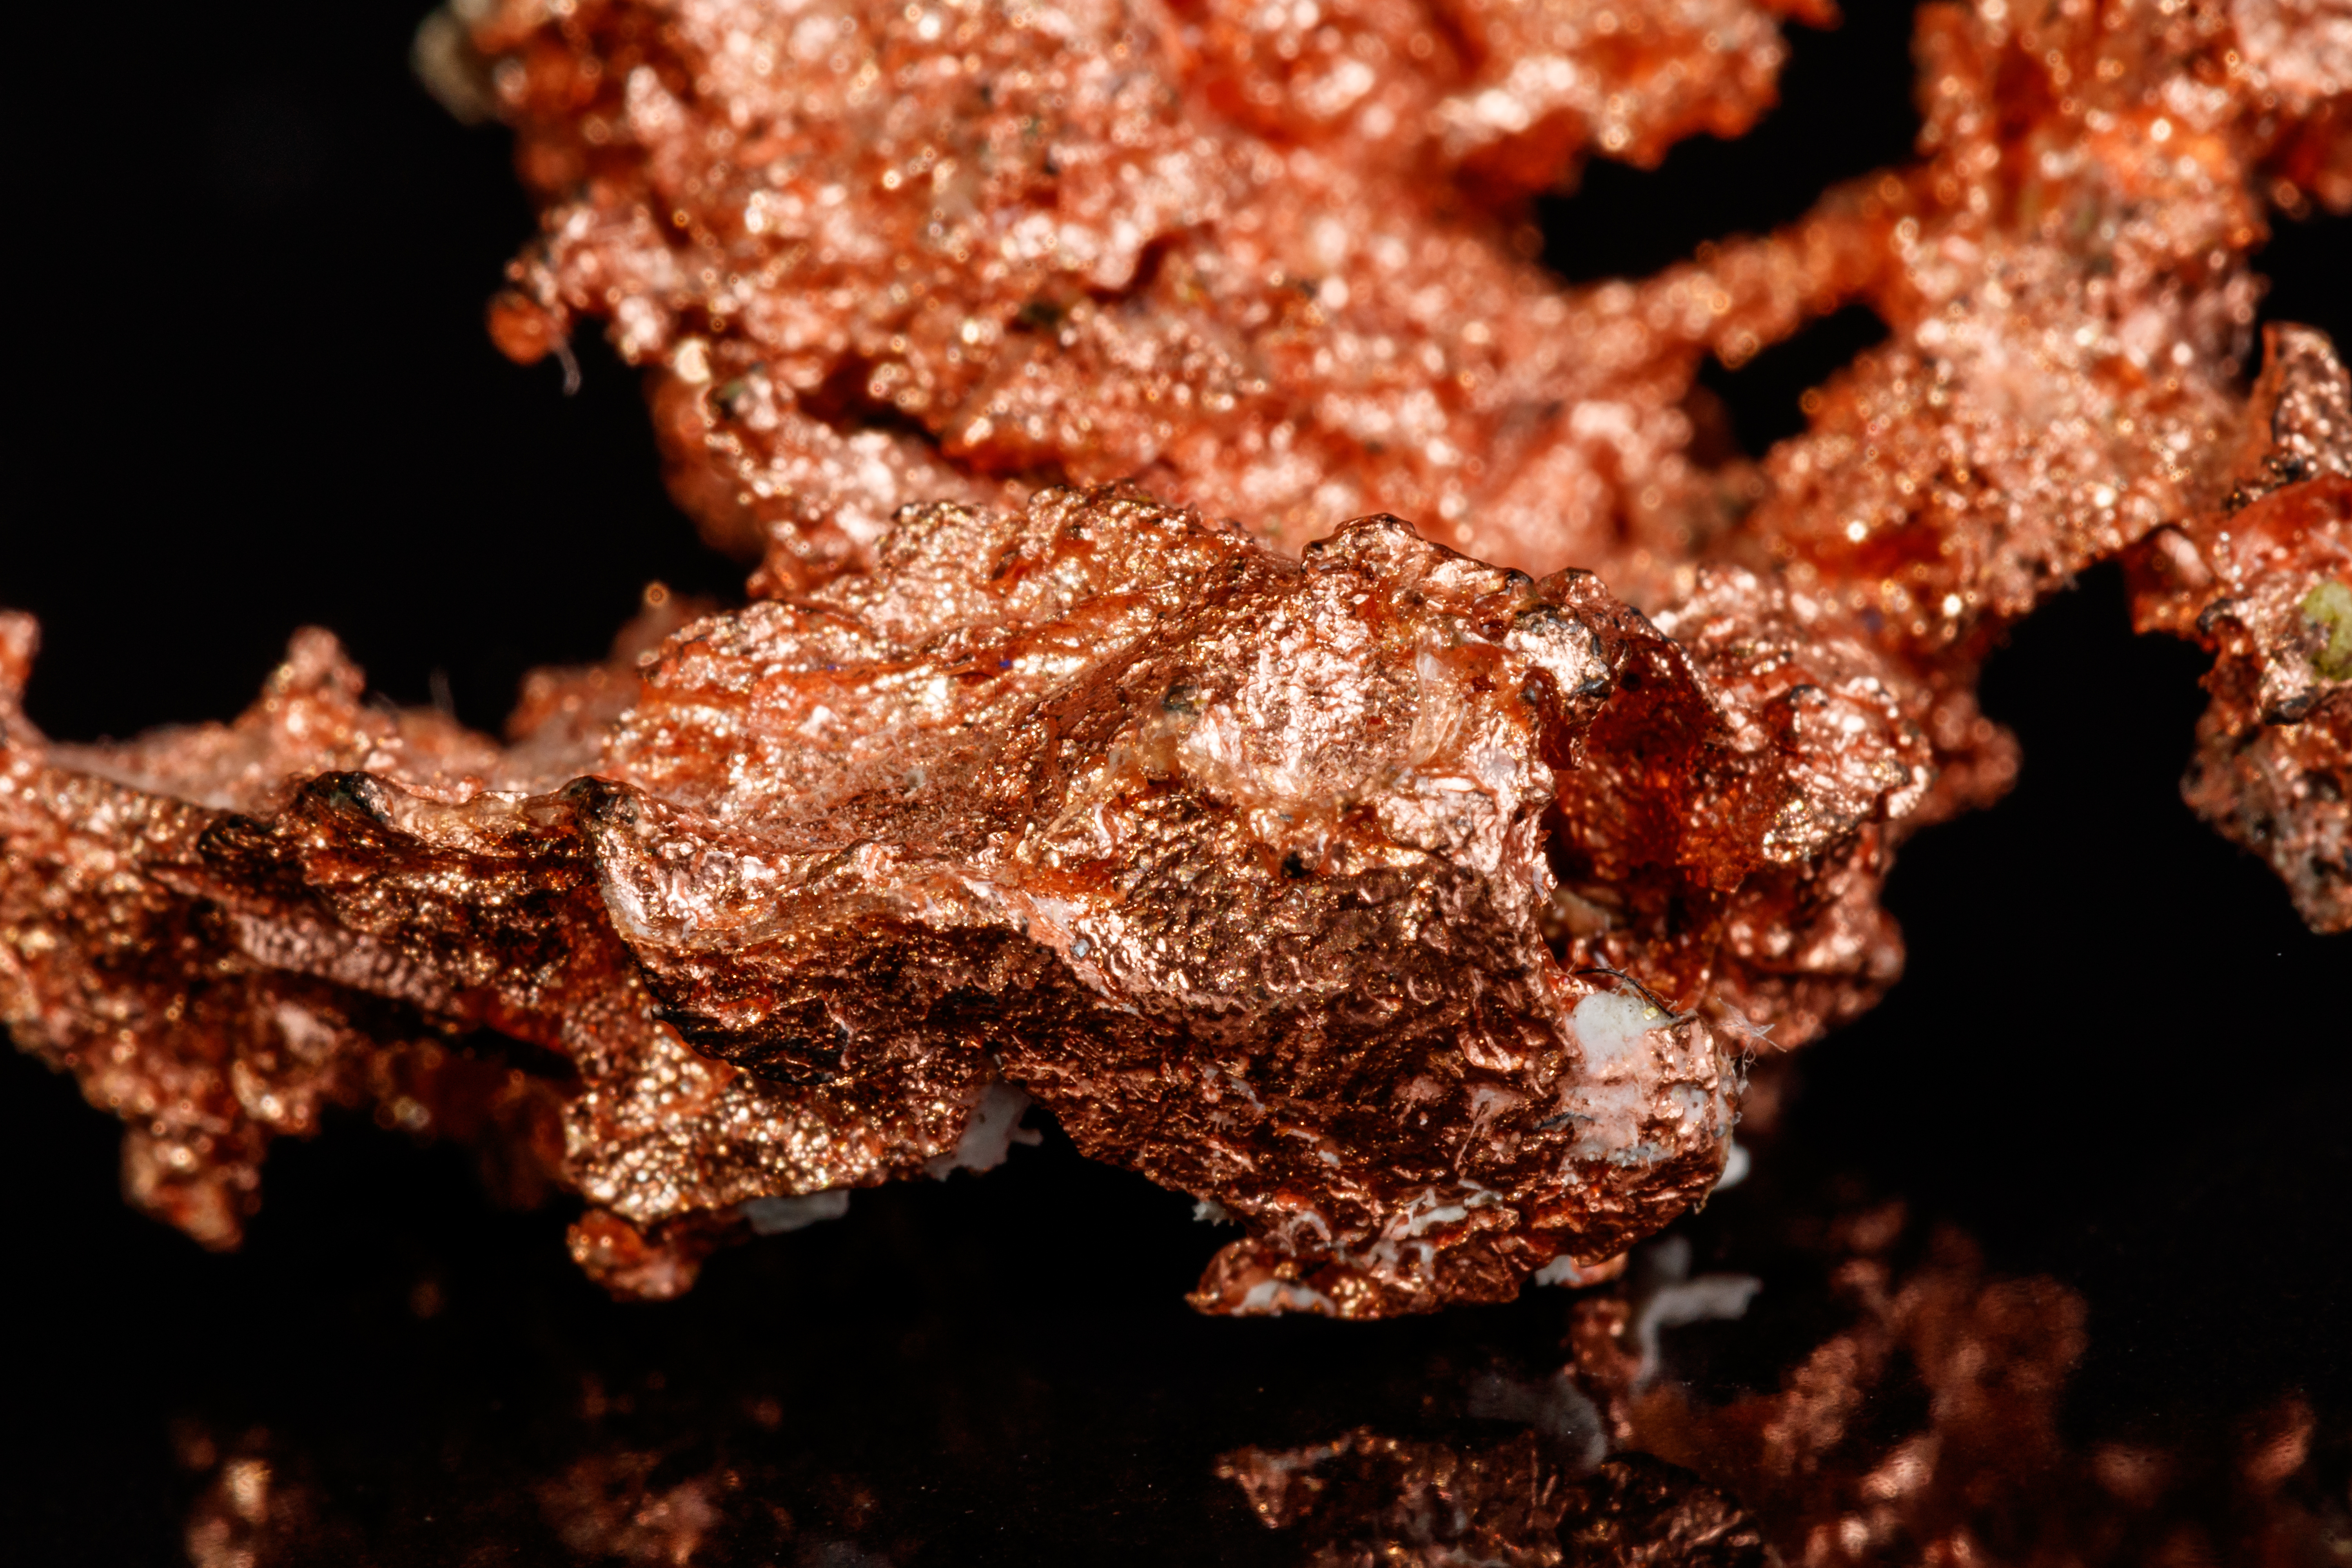 Metso copper solutions